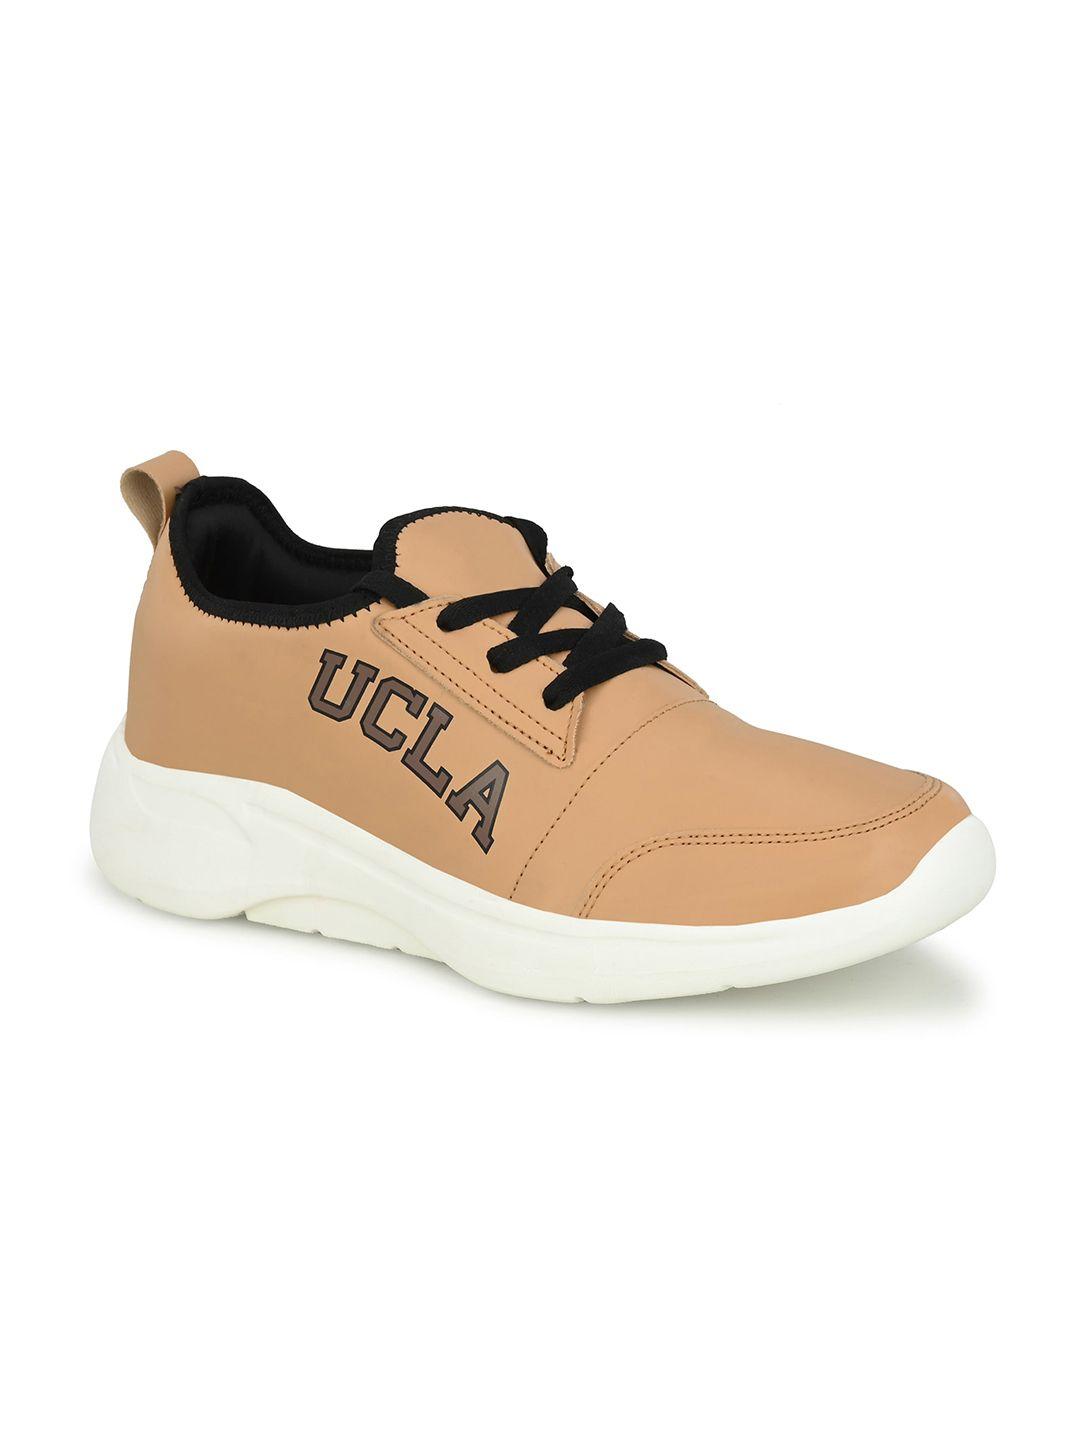 ucla men running non-marking shoes